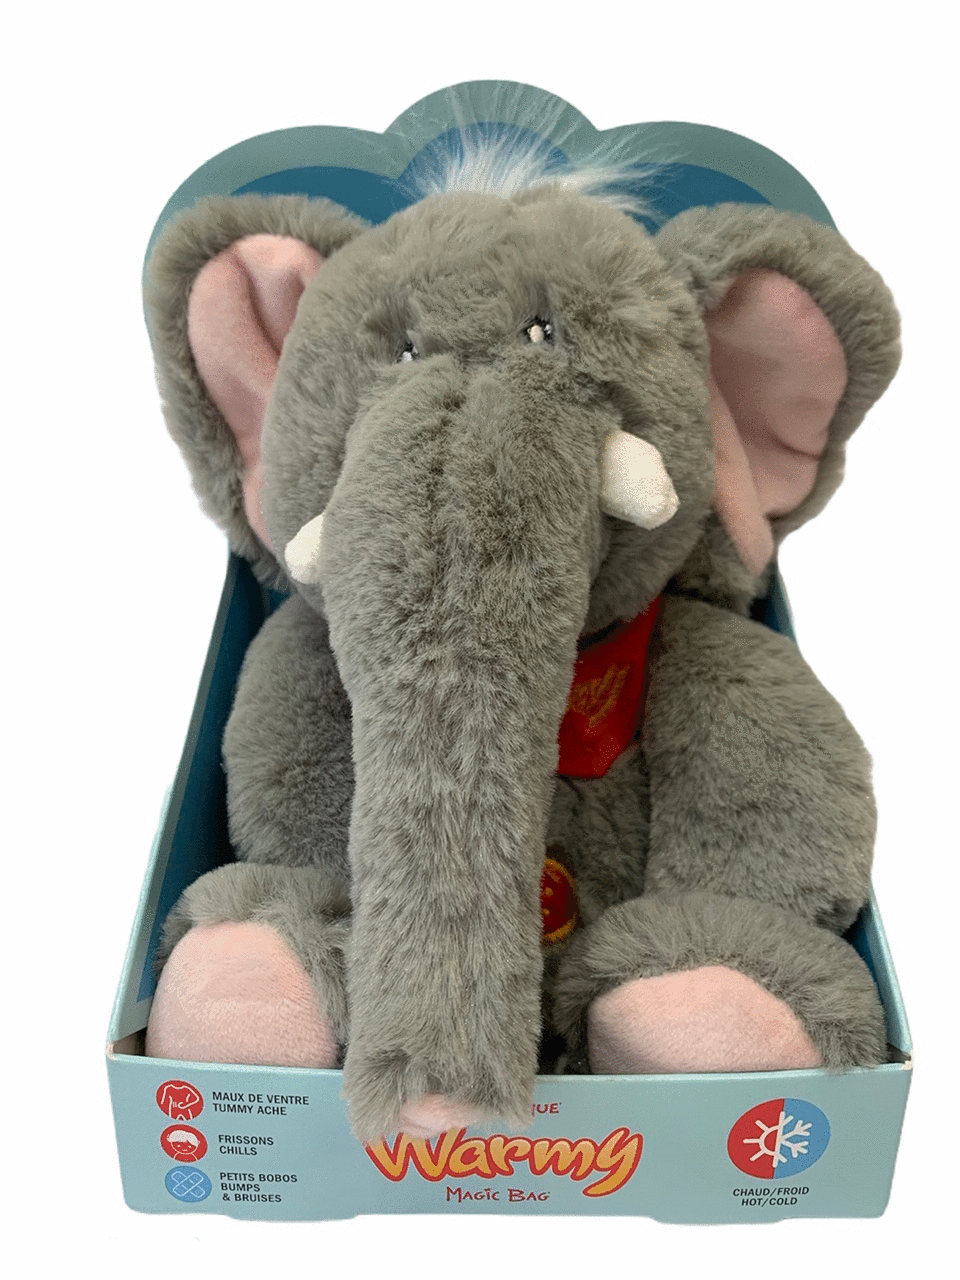 Magic Bag Warmy Edgar the Elephant - The Original Magic Bag